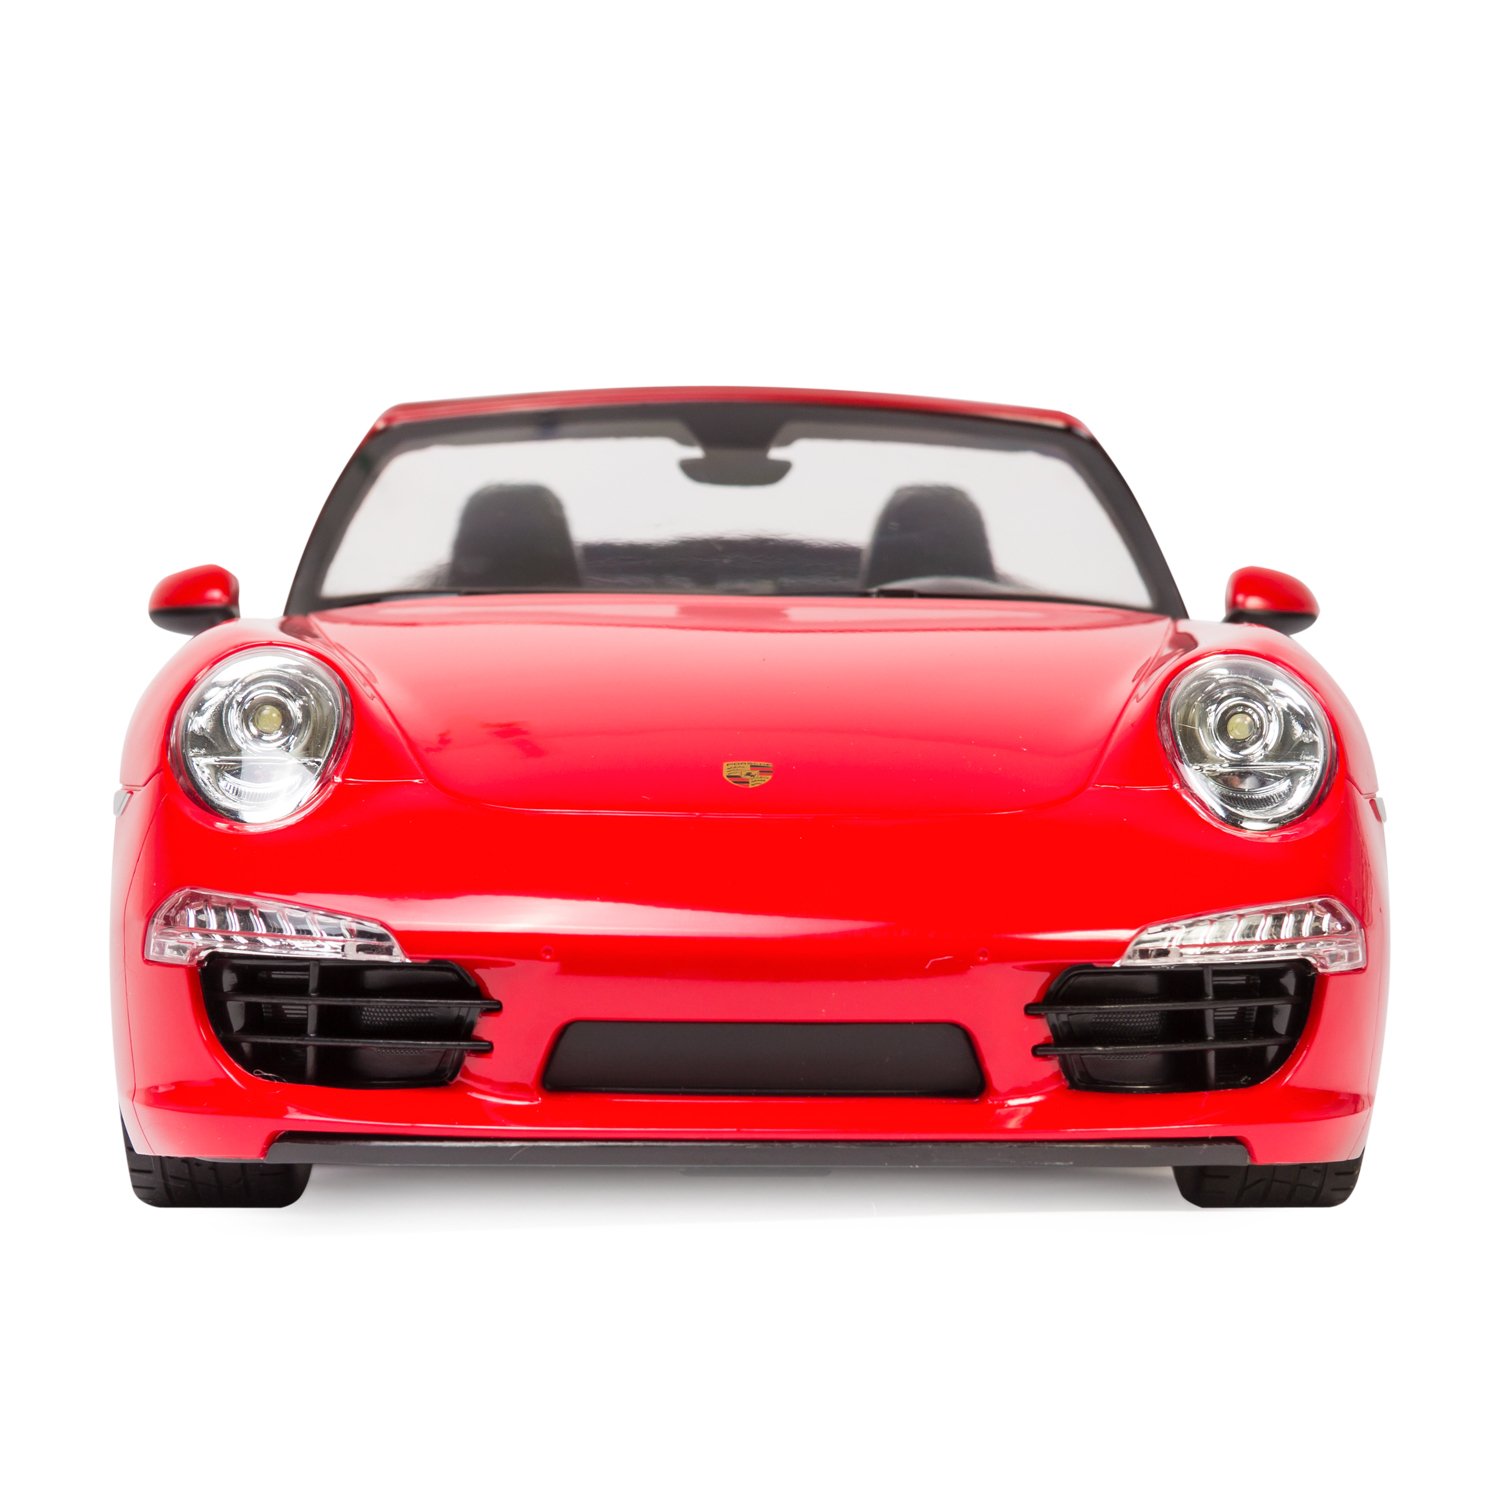 Машина р/у Rastar Porsche 911 CarreraS 1:12 красная